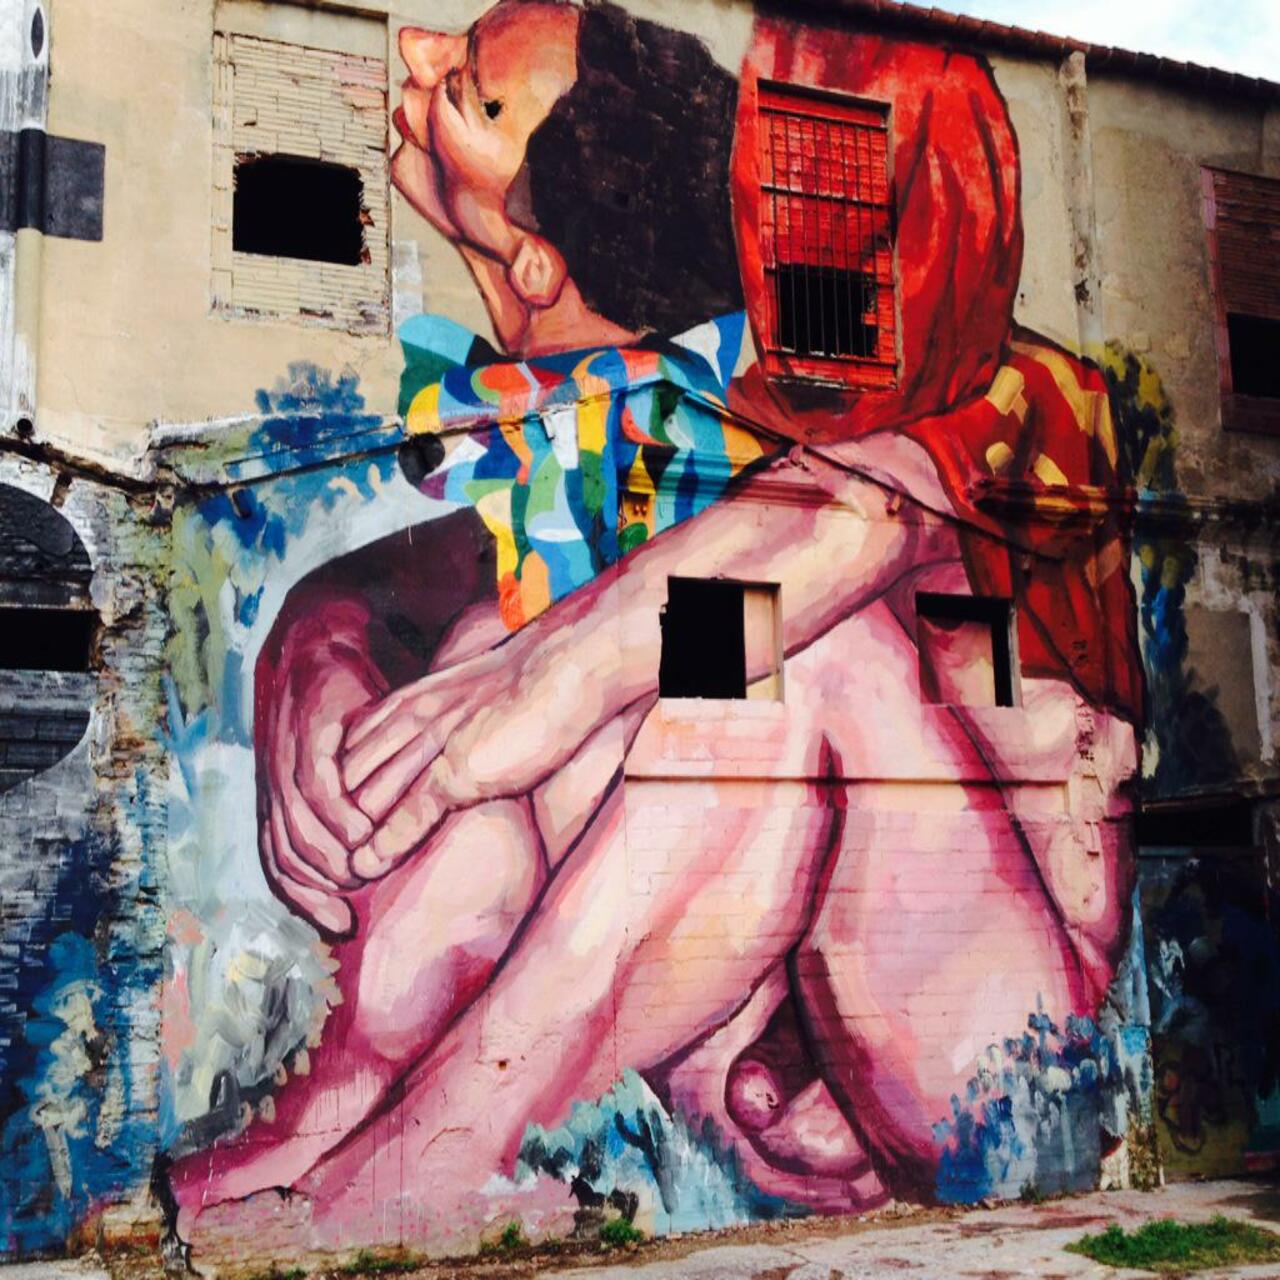 #streetart #mural anyone know the artist?? #graffiti #urban #art http://t.co/3Amc9vVx6u